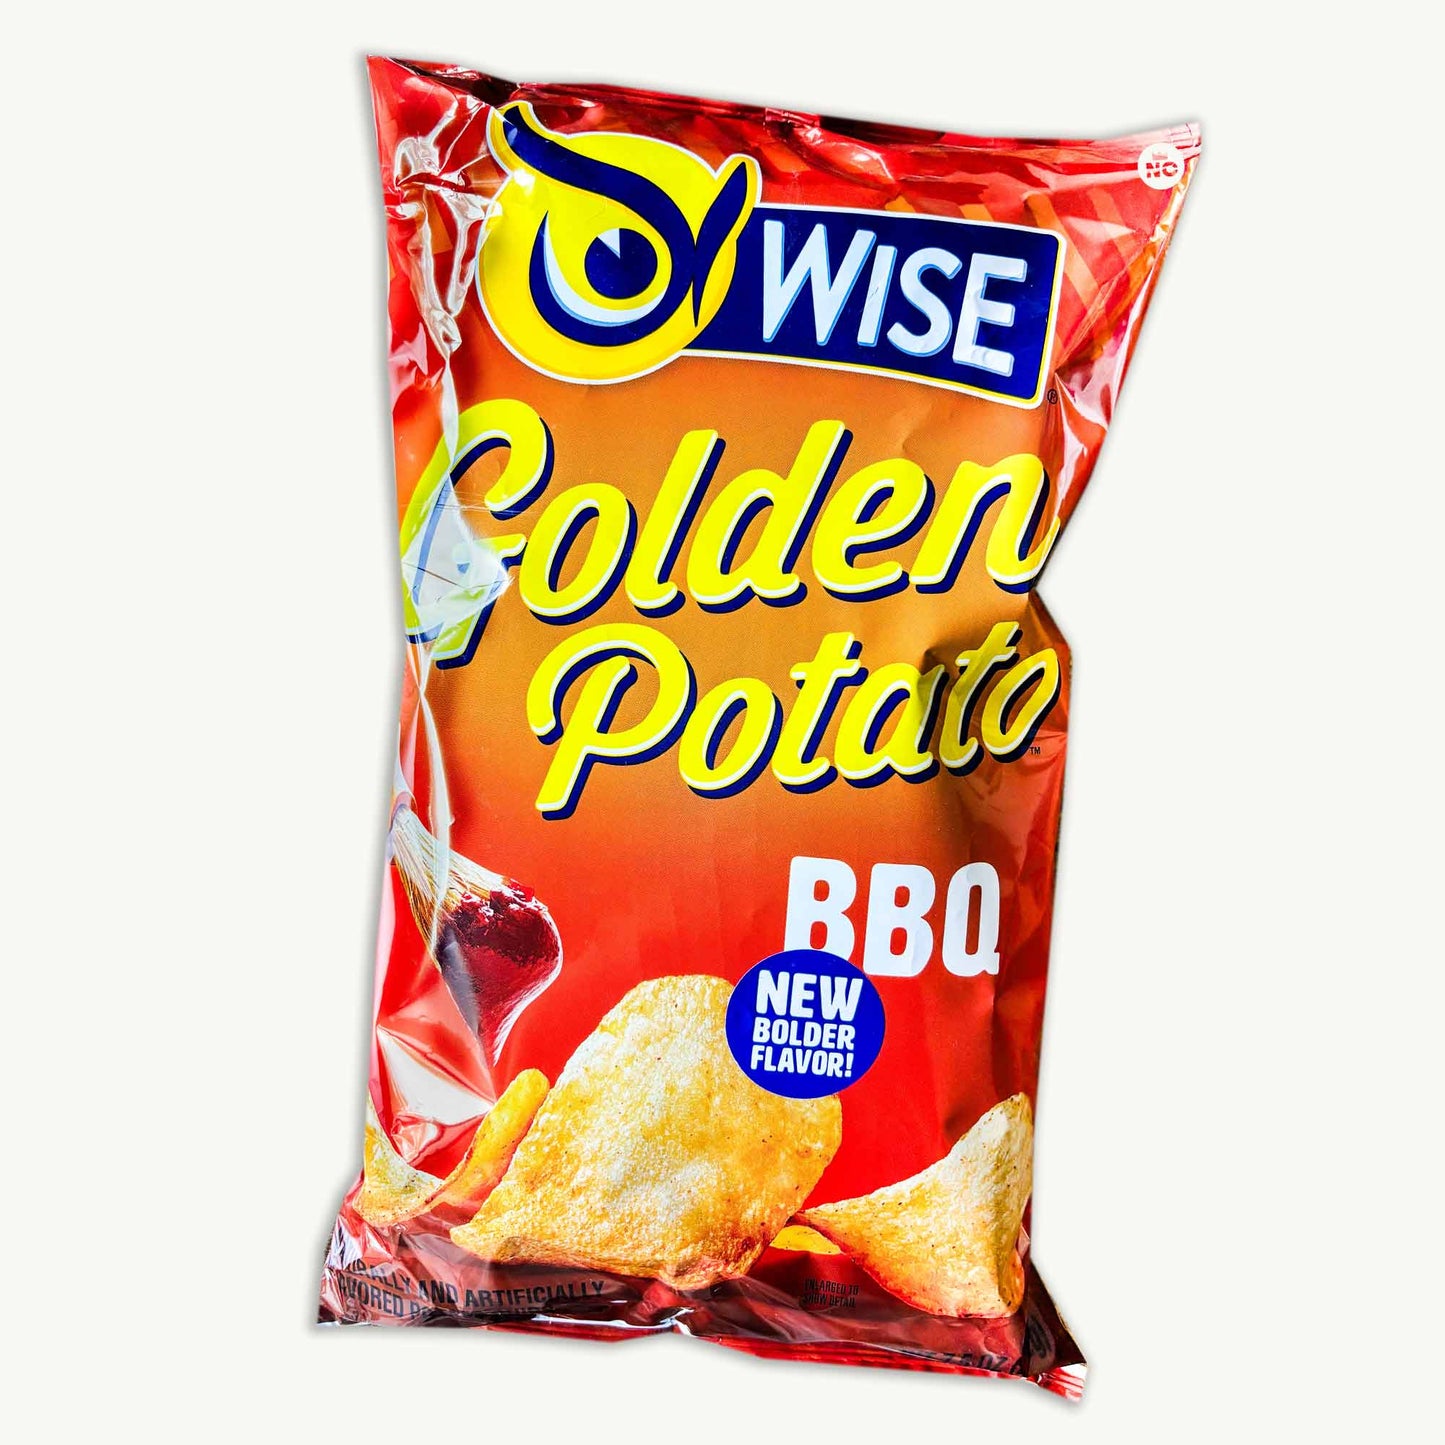 Wise BBQ Potato Chips 7.5oz